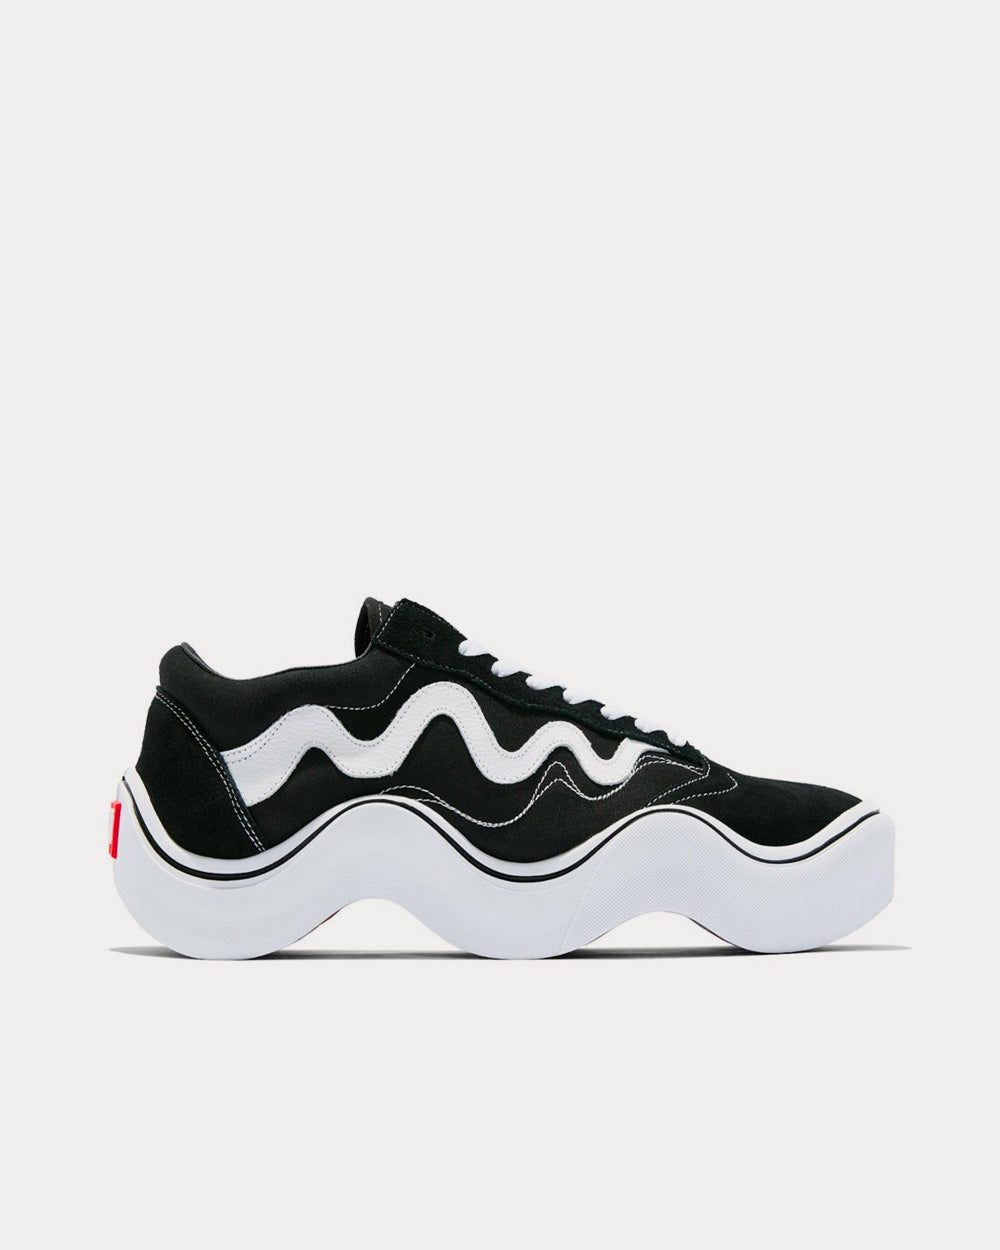 x Tyga 'Wavy Baby' Black / White Low Top Sneakers